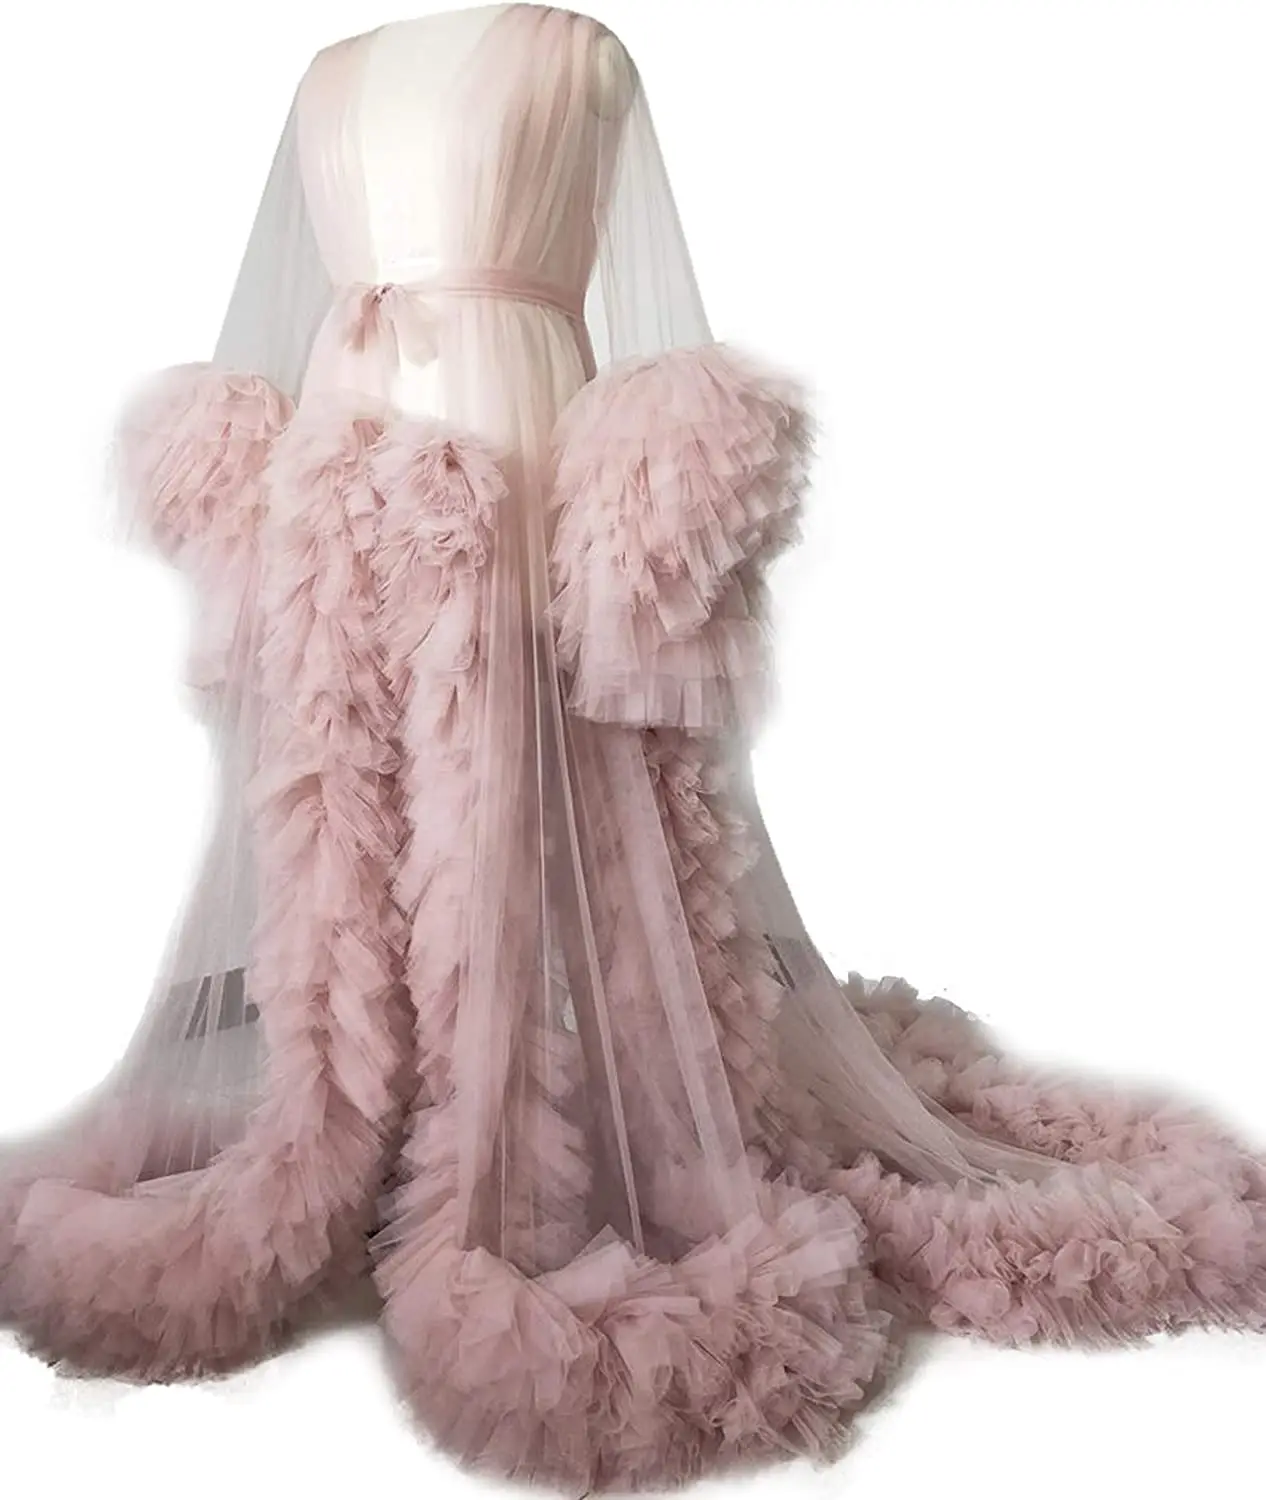 

Ladies Dust Pink Dressing Gown Sheer Long Robe Fluffy Dessous Fotografie Bridal Fluffy Maternity Robes Photo Shoot Bathrobe